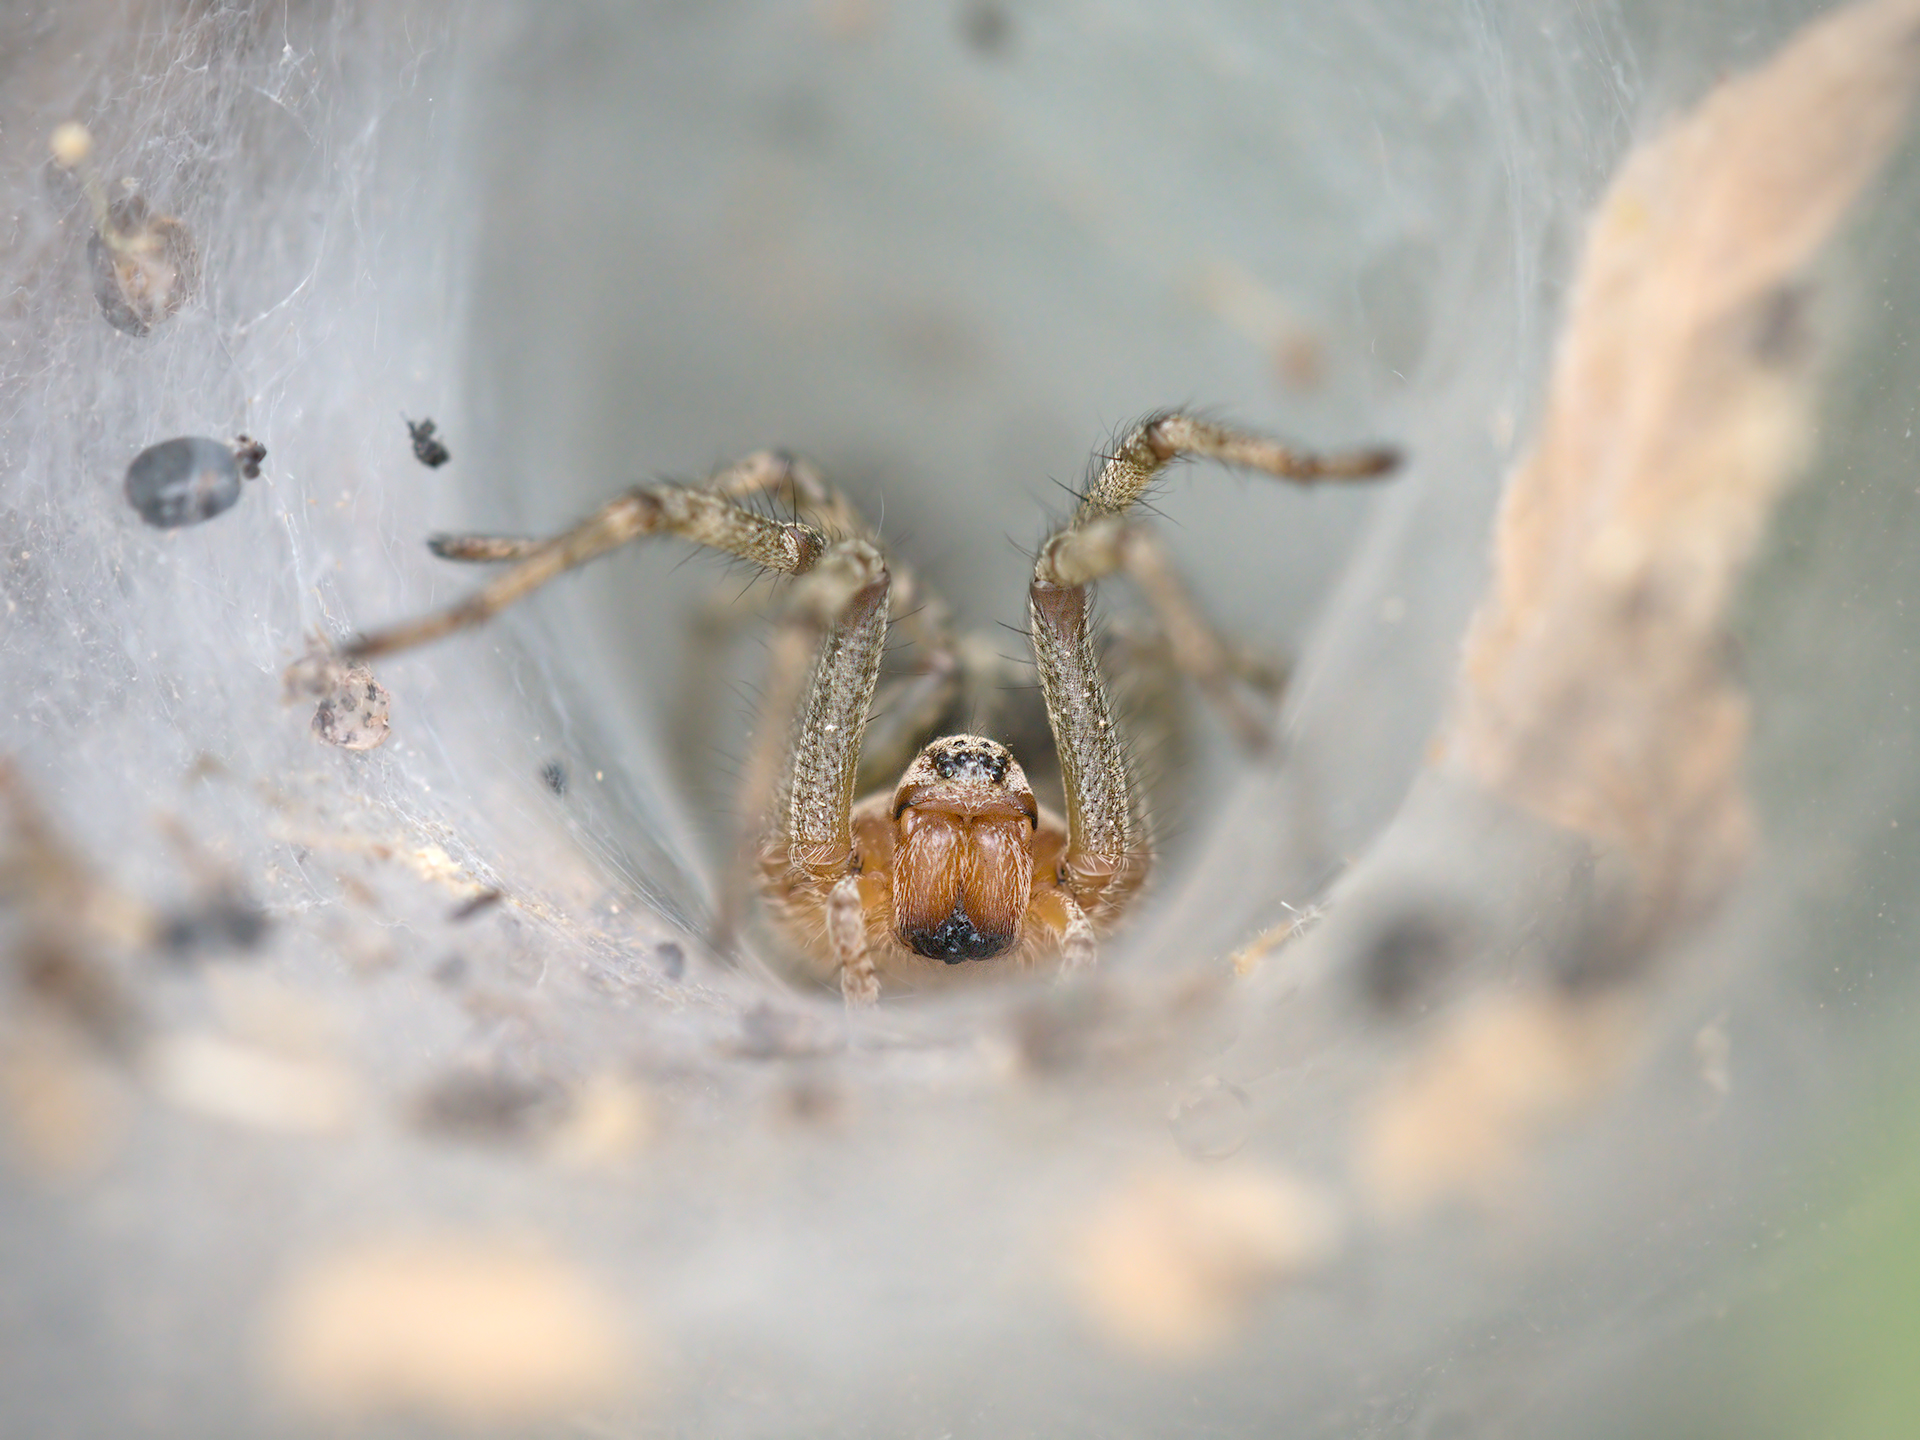 Spider in its cobweb den ...